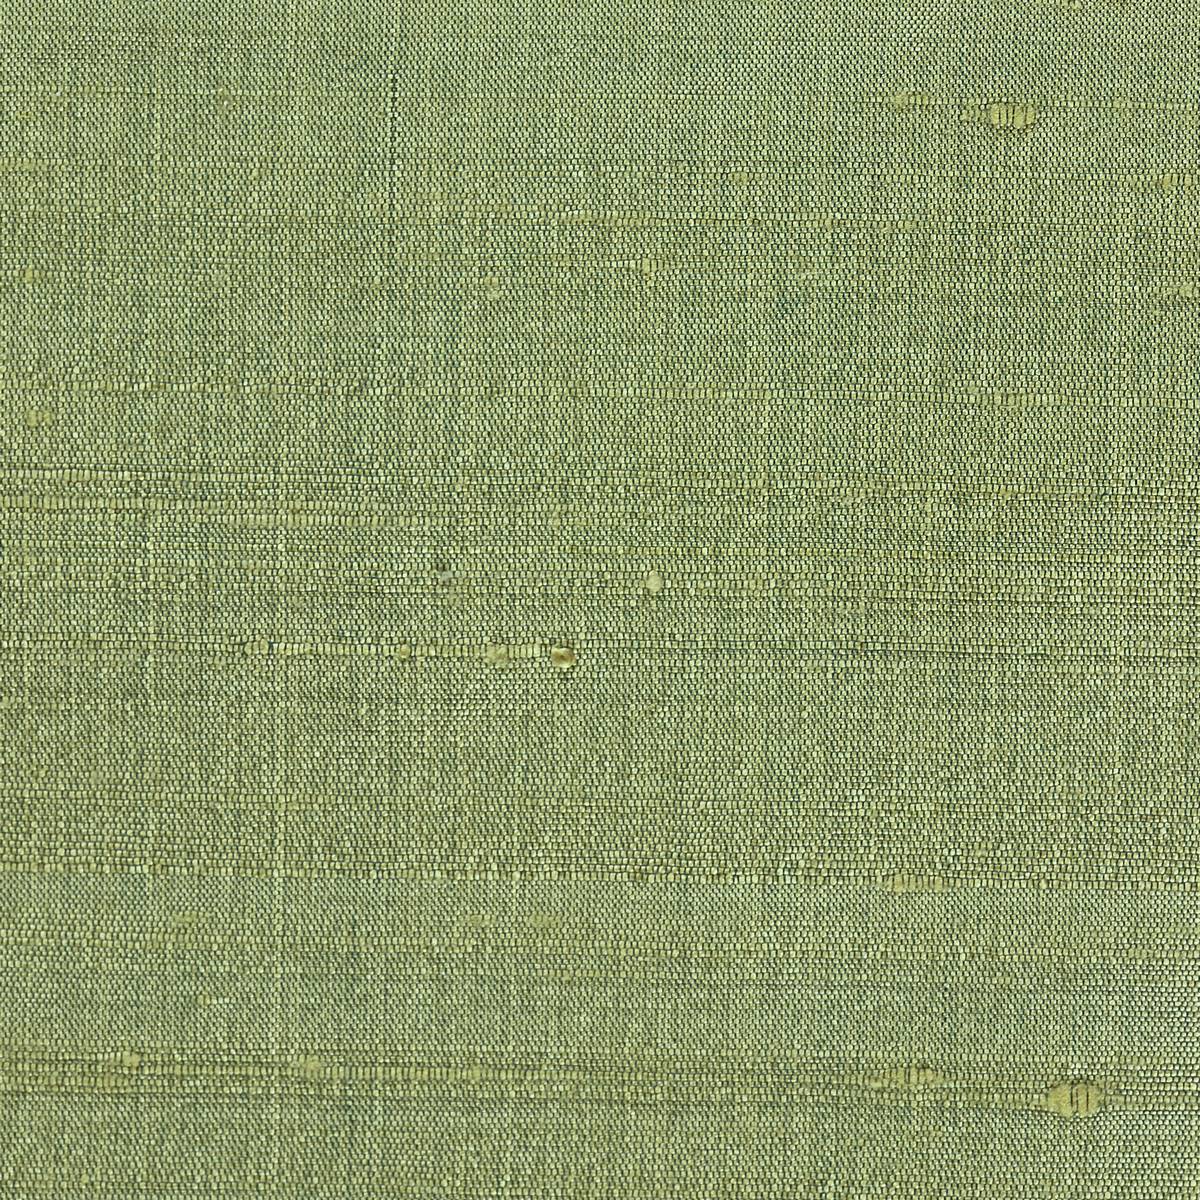 Laminar Alpine Fabric by Harlequin